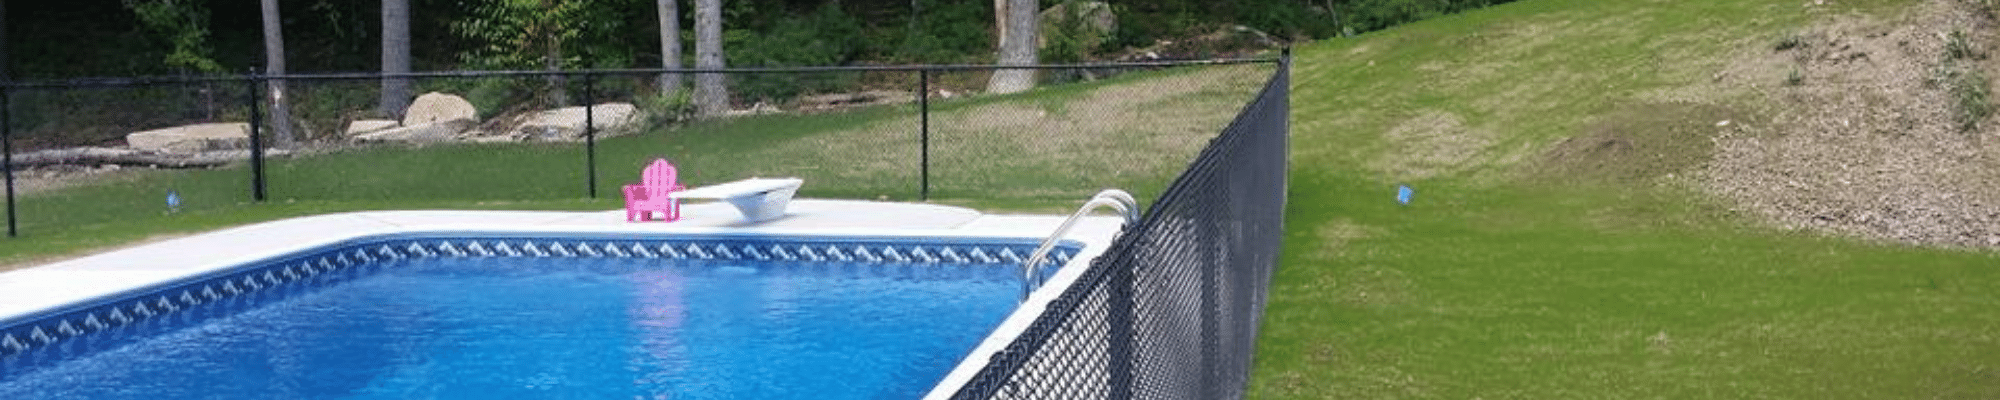 inground pool fence ideas